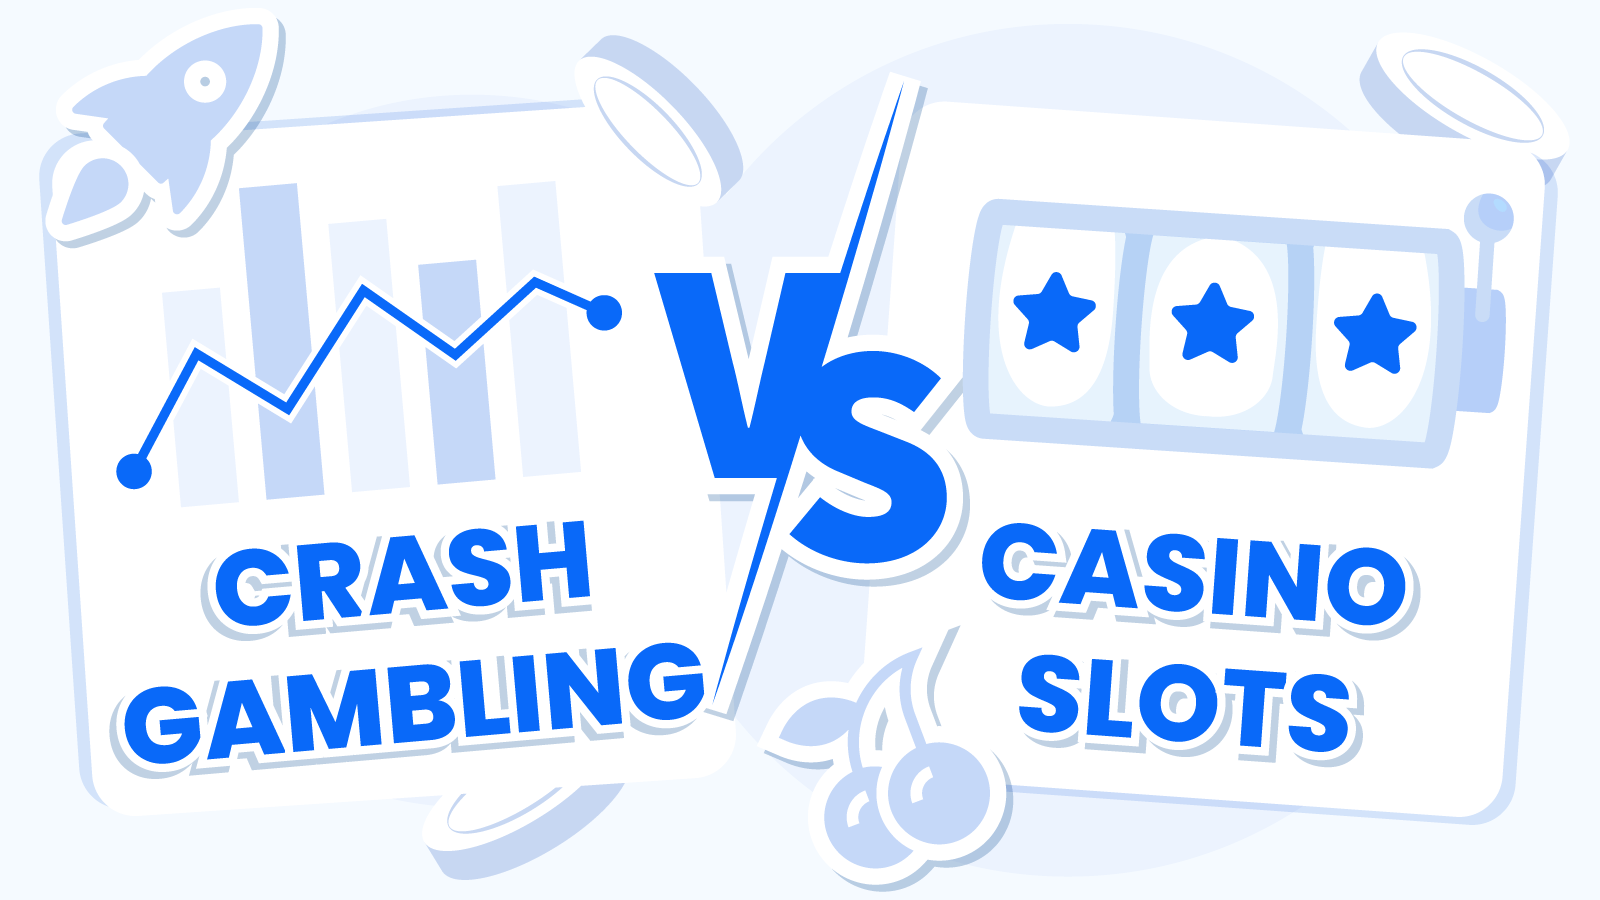 Crash Gambling vs Casino Slots Compared